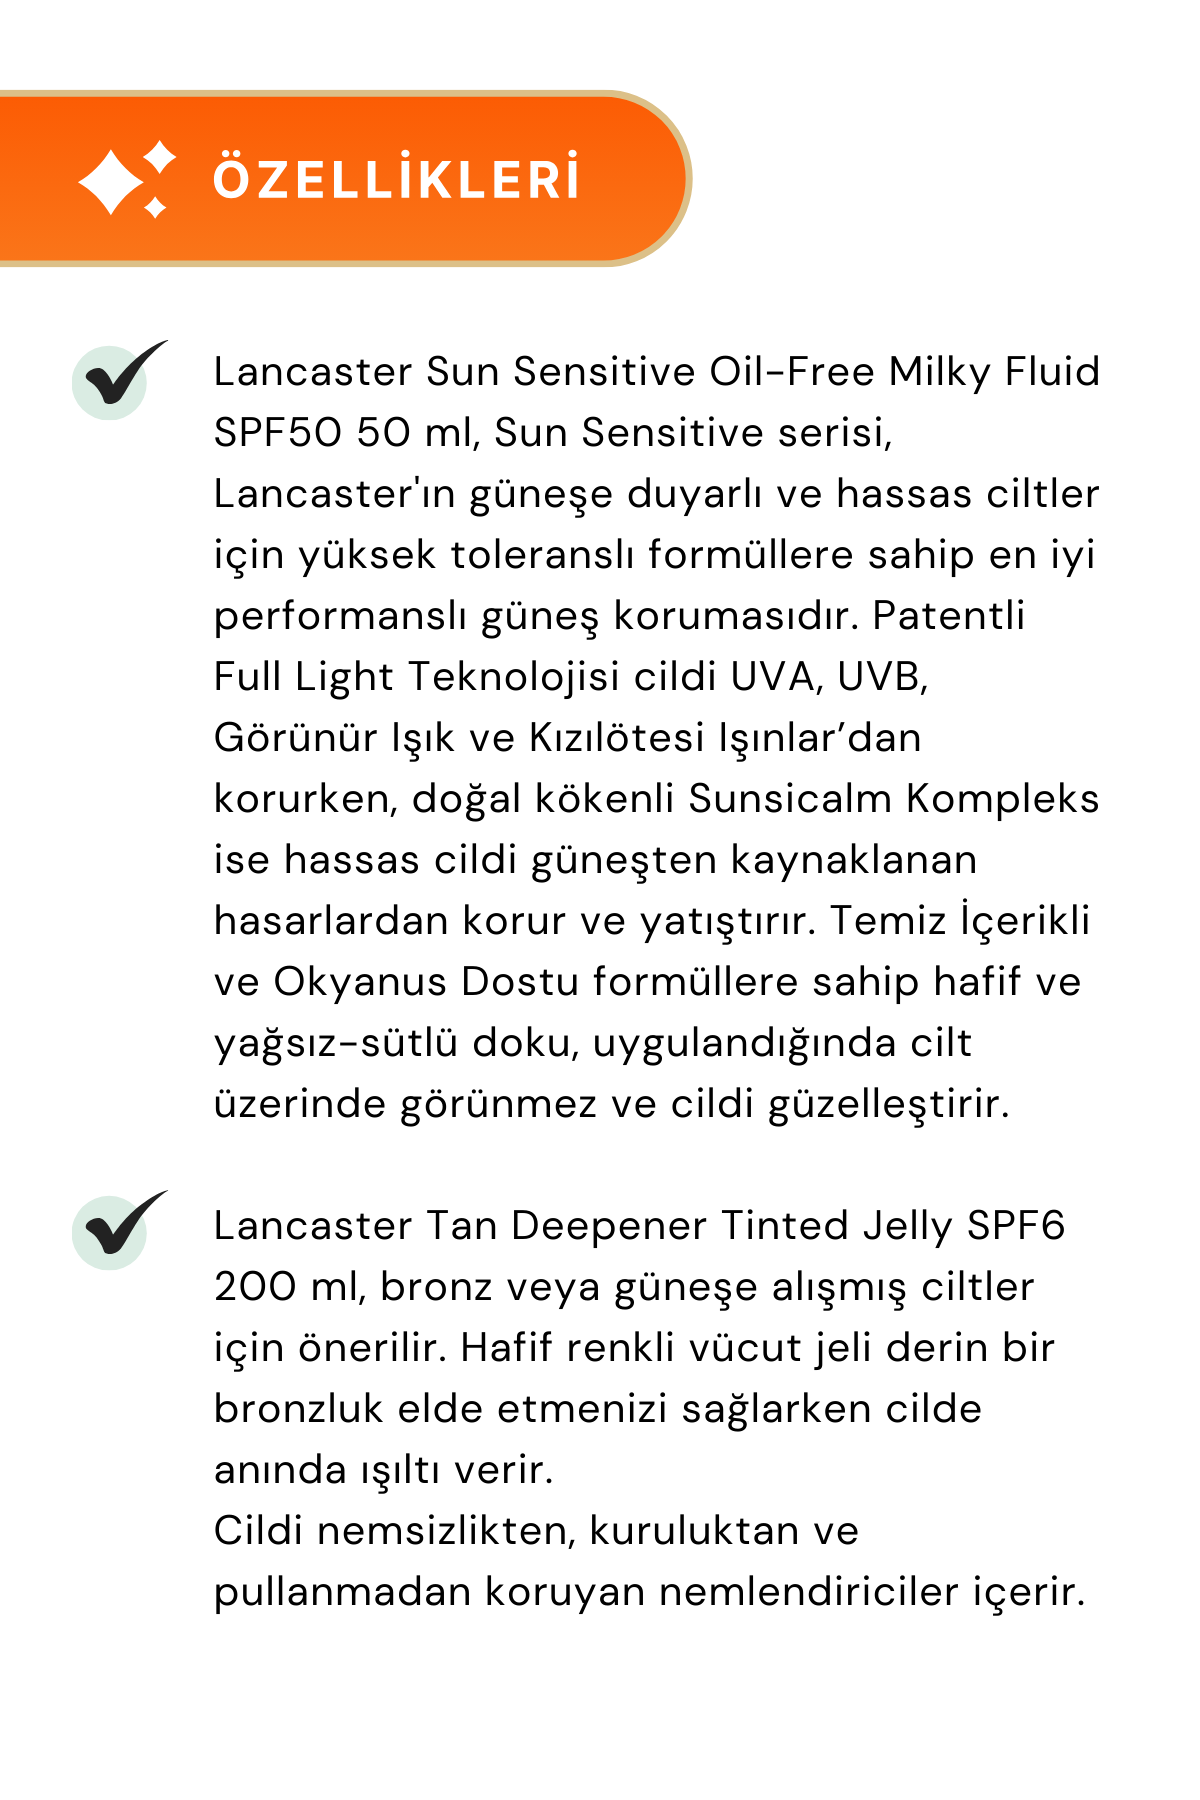 Lancaster Sun Sensitive Oil-Free Milky Fluid SPF50 50 ml & Tan Deepener Tinted Jelly SPF6 200 ml